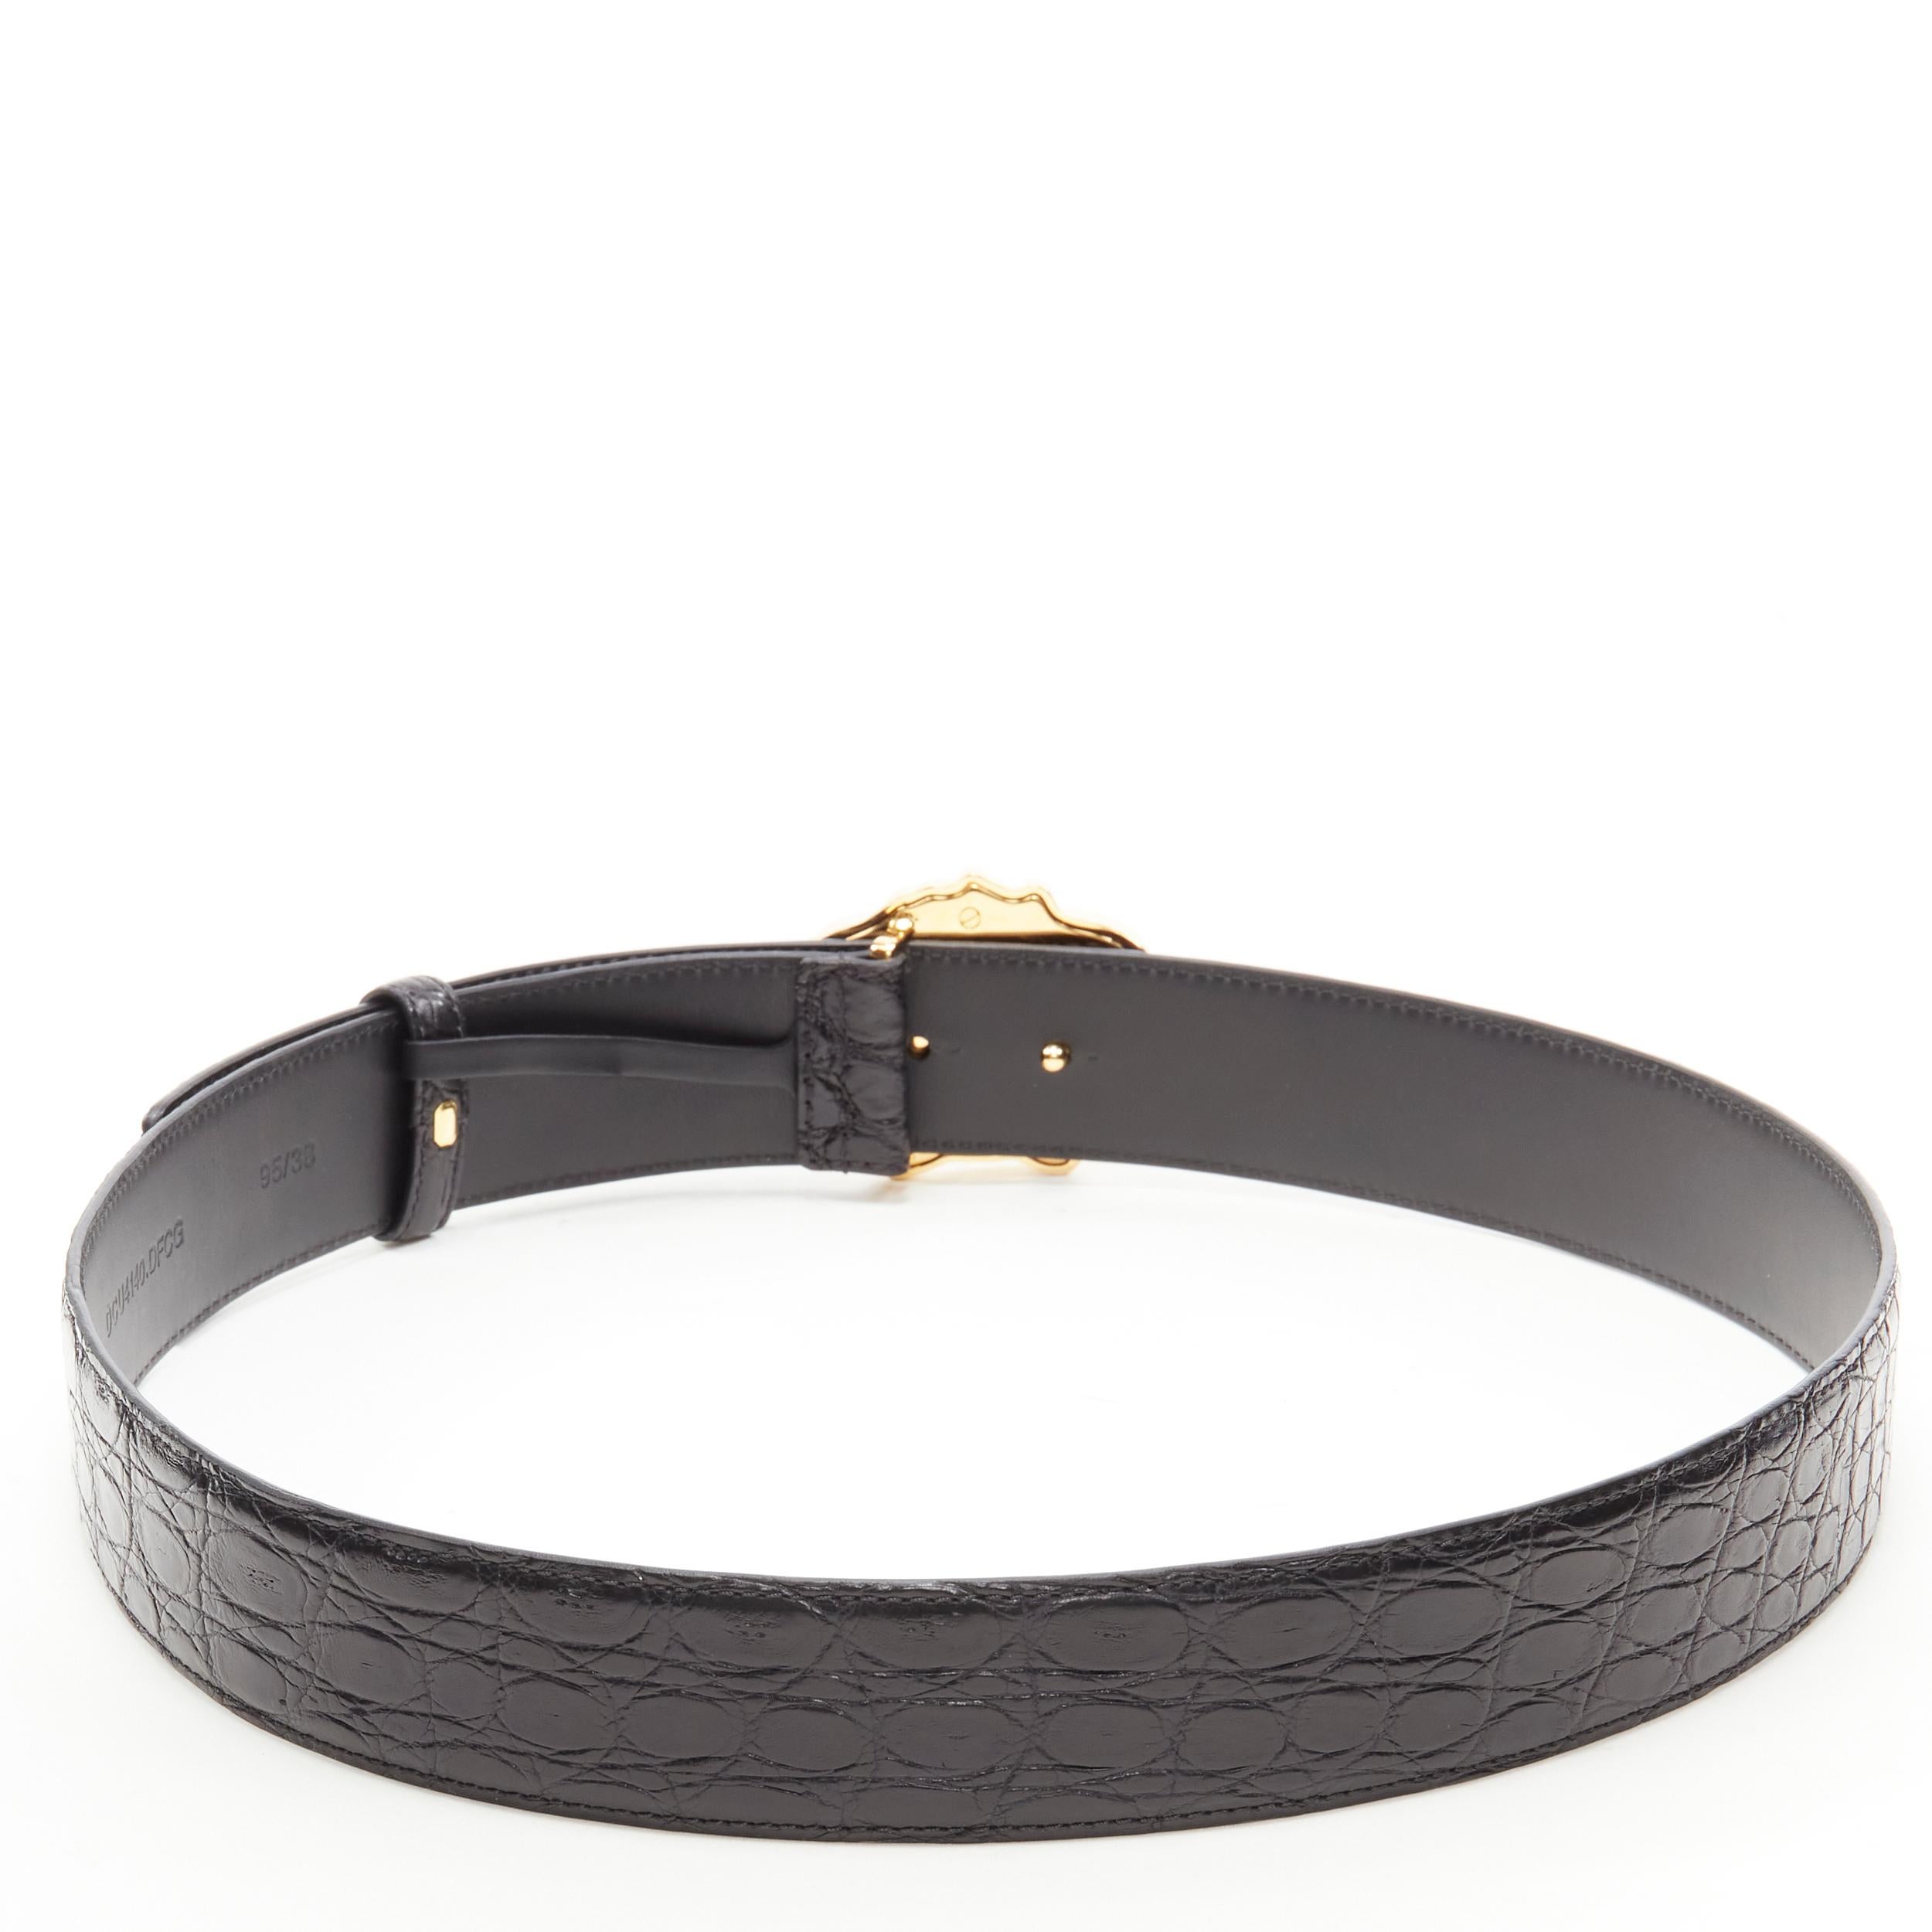 Black new VERSACE $1200 La Medusa gold buckle black croc leather belt 110cm 44